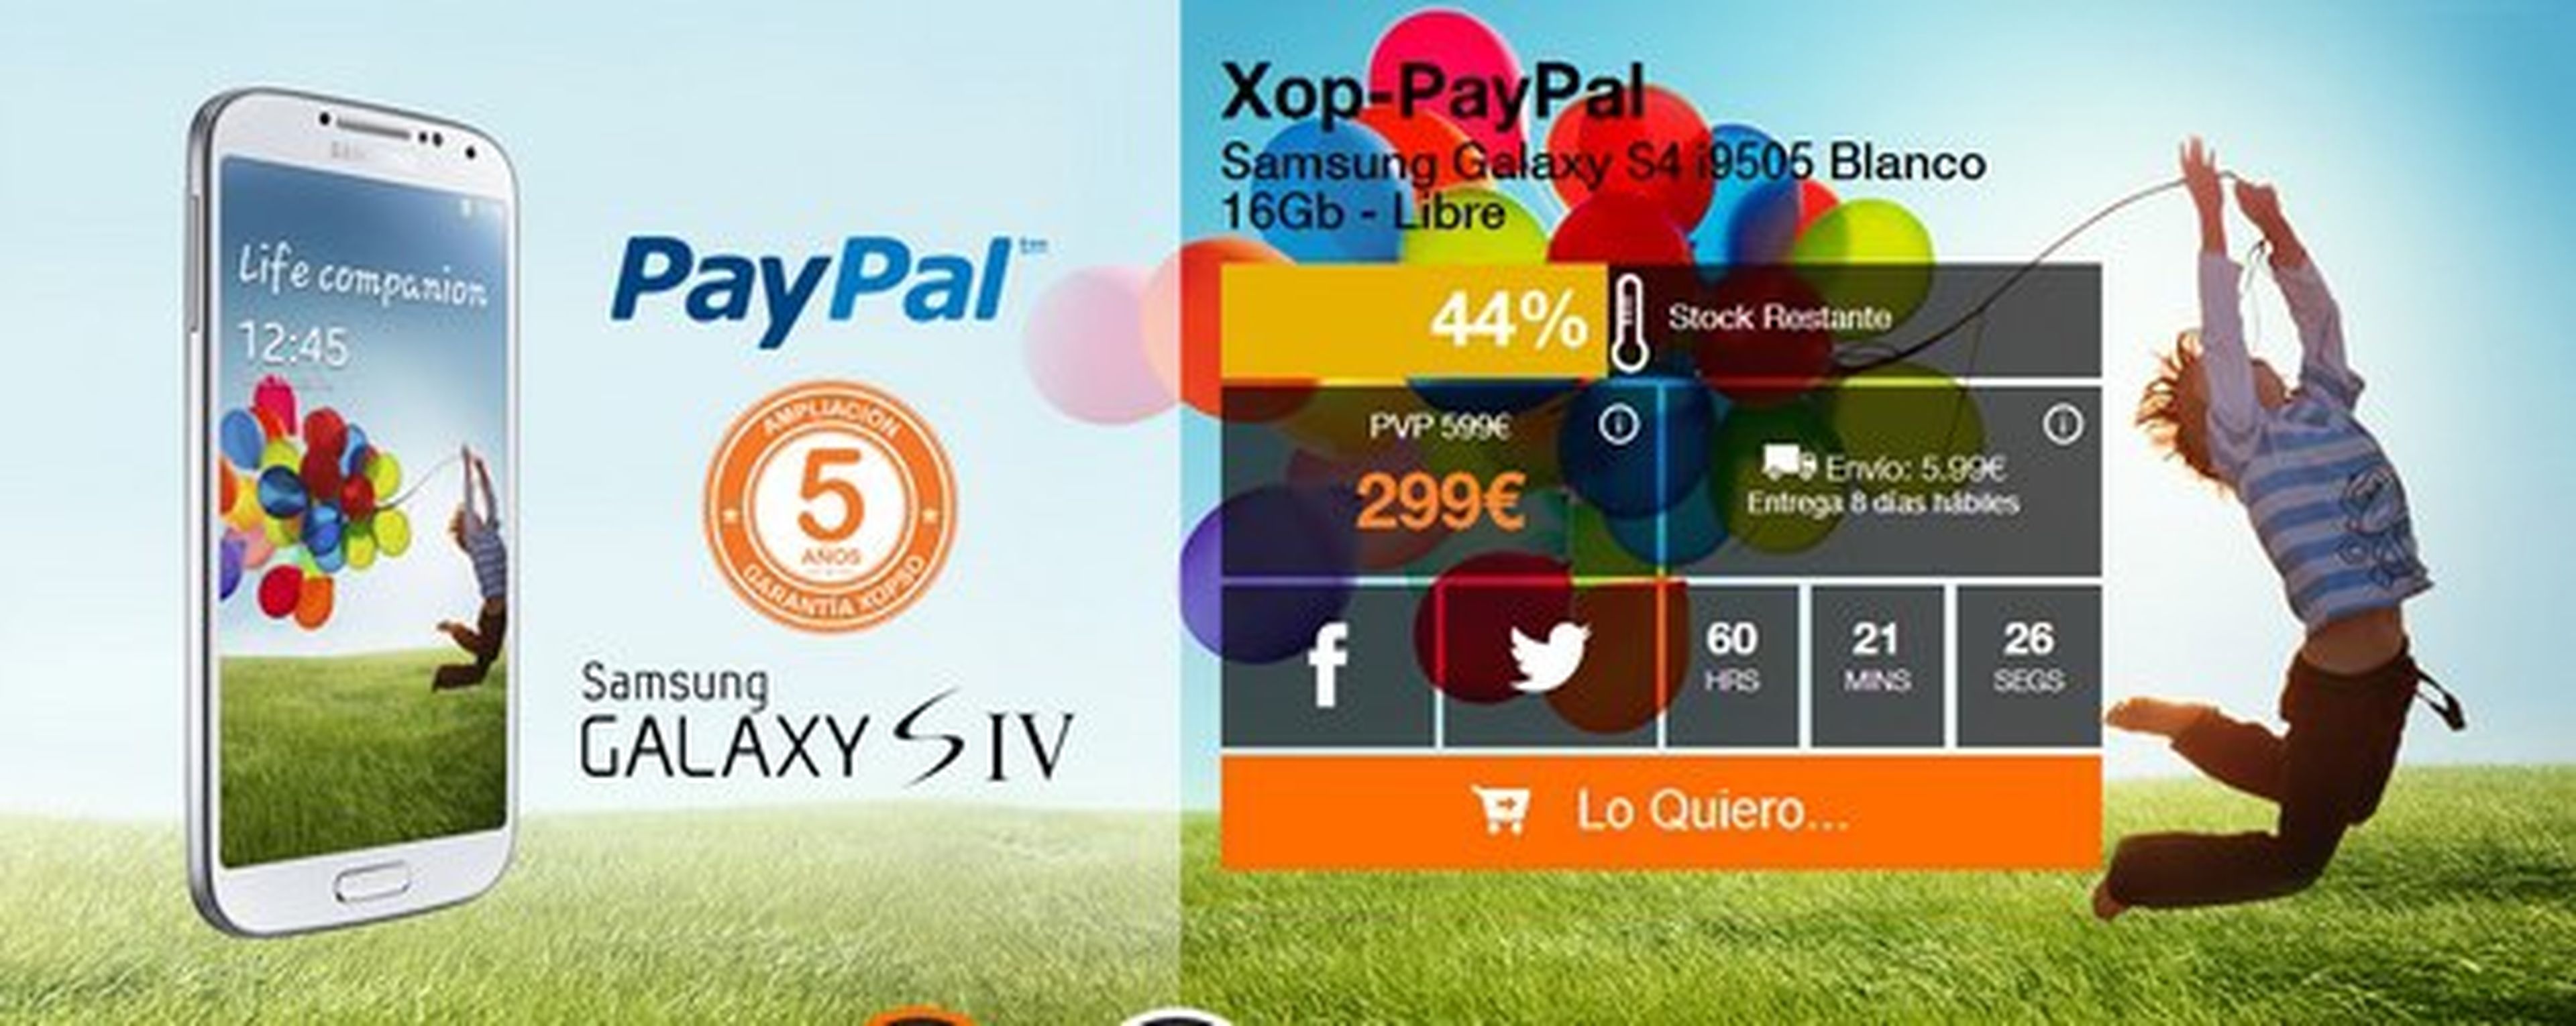 Samsung Galxy S4 a 299€ en Xopso PayPal